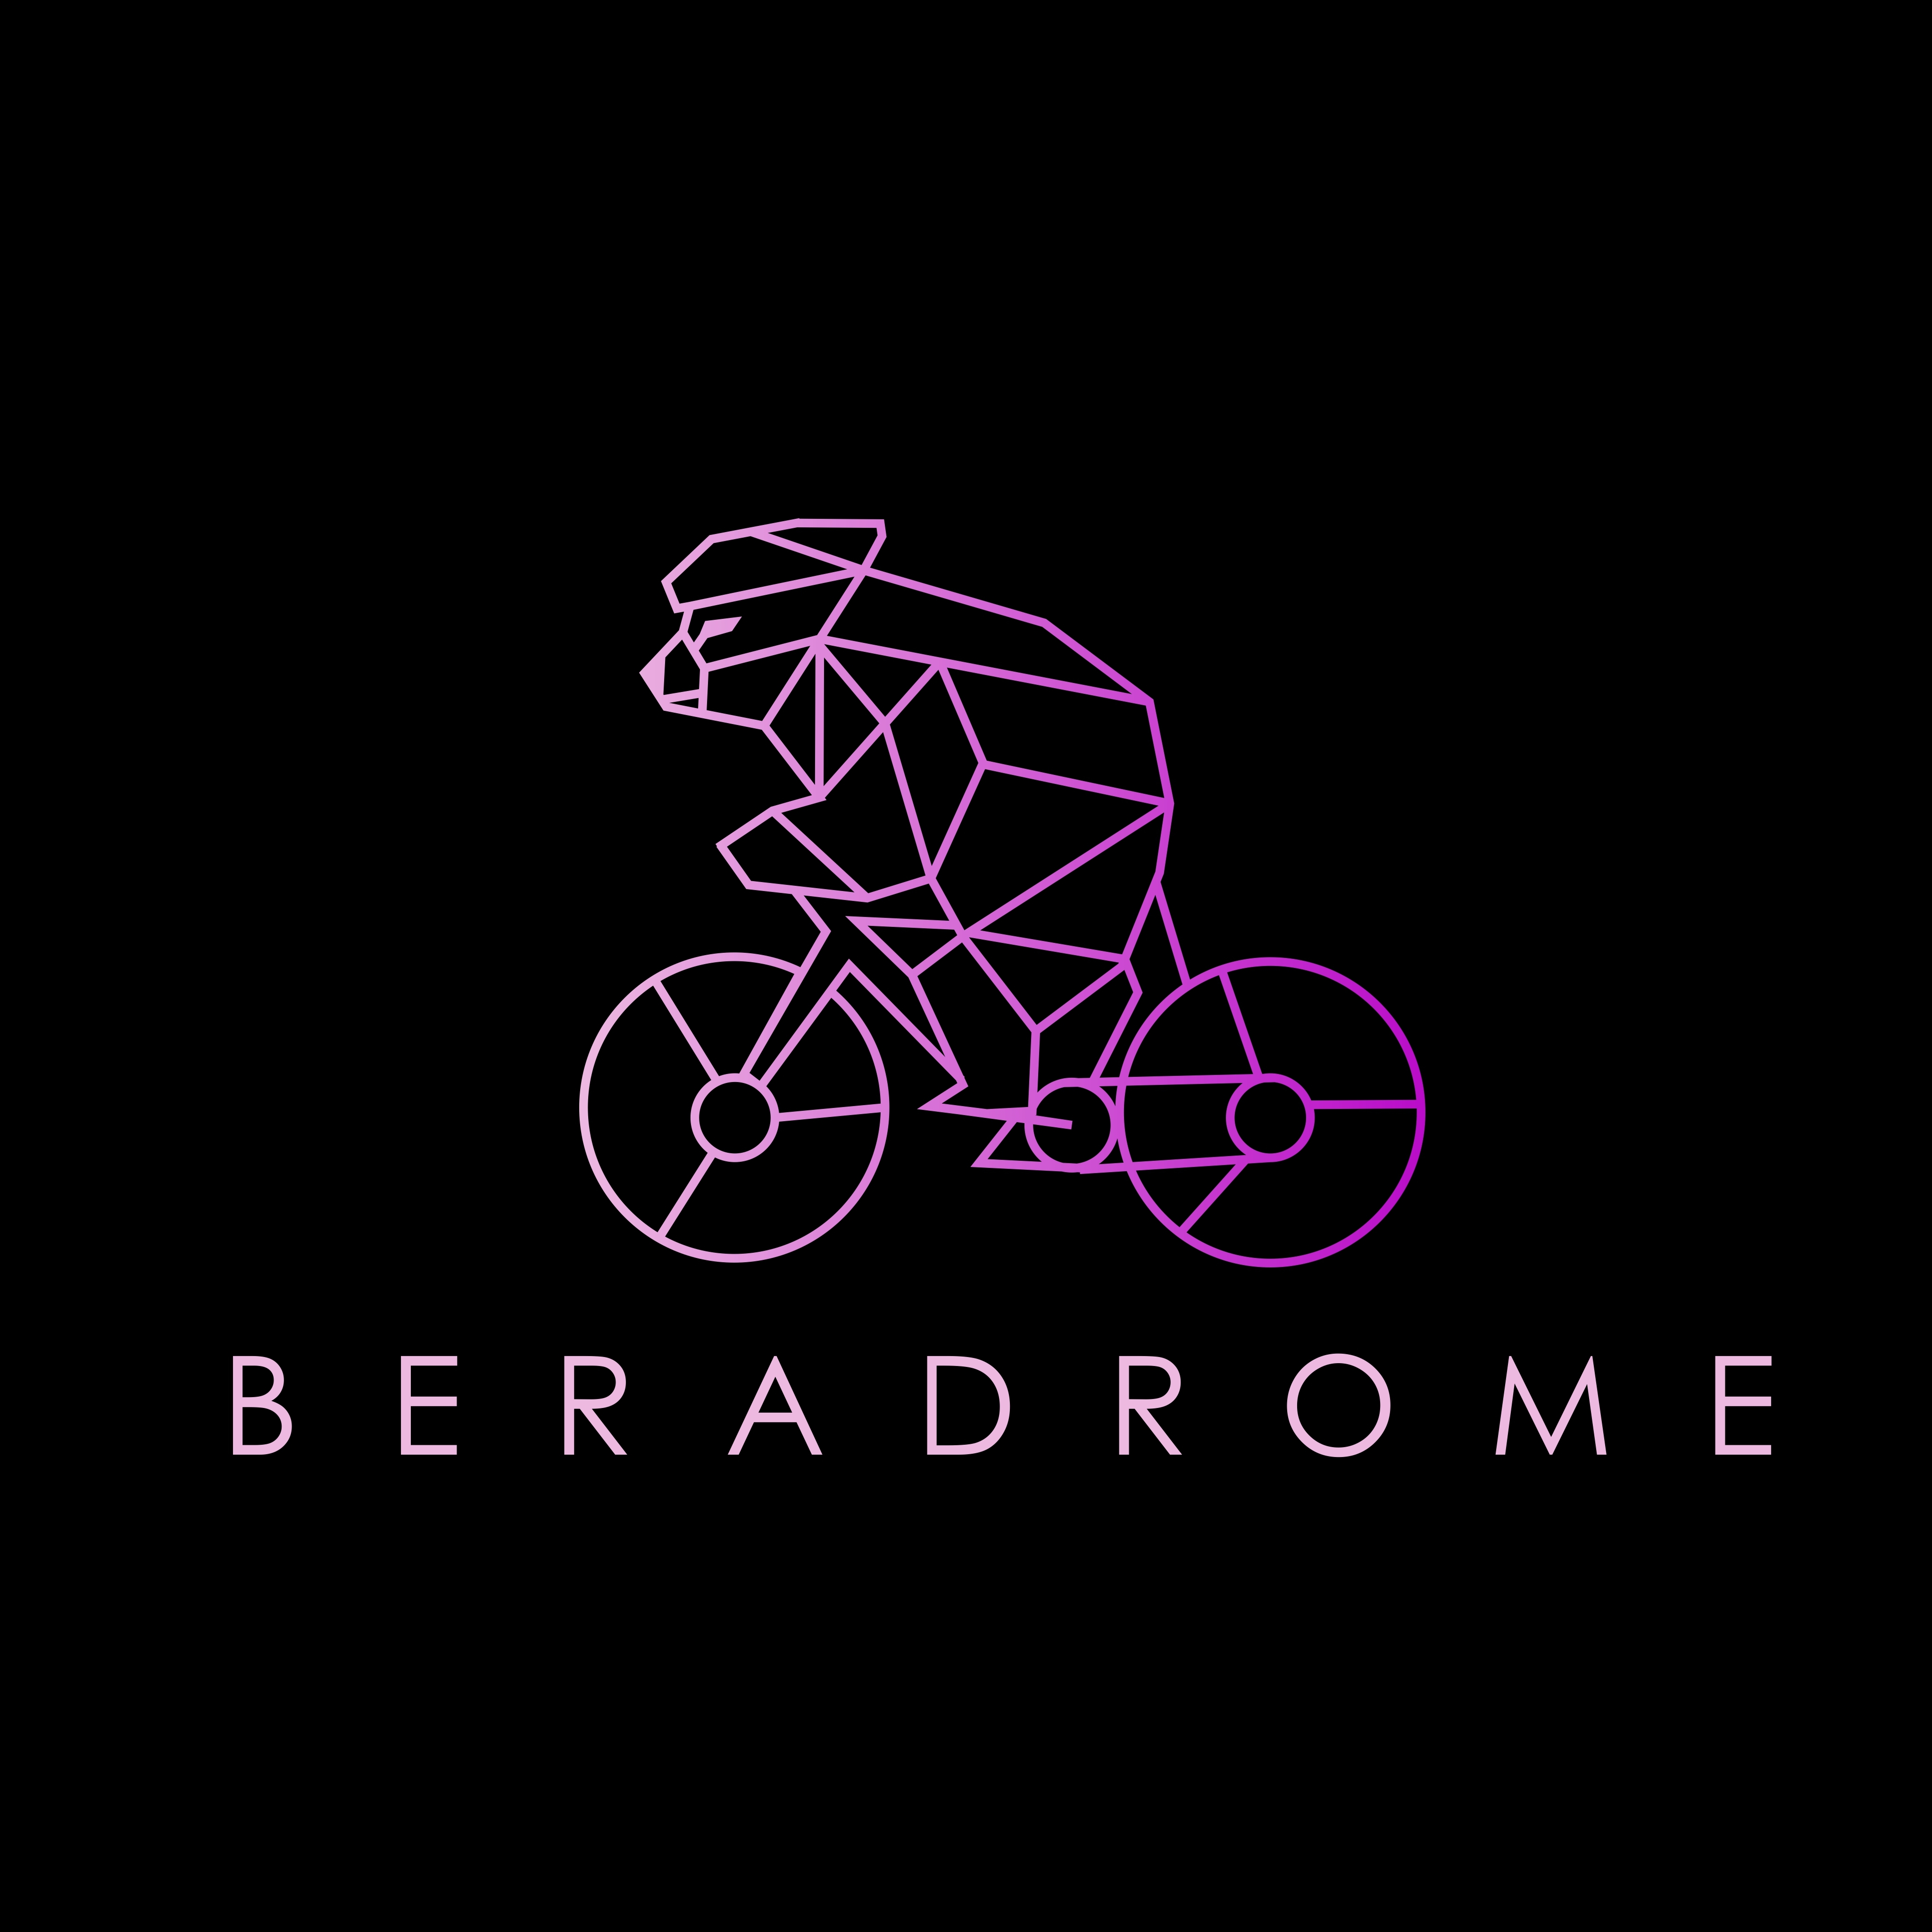 Beradrome logo - Bear riding a bicycle